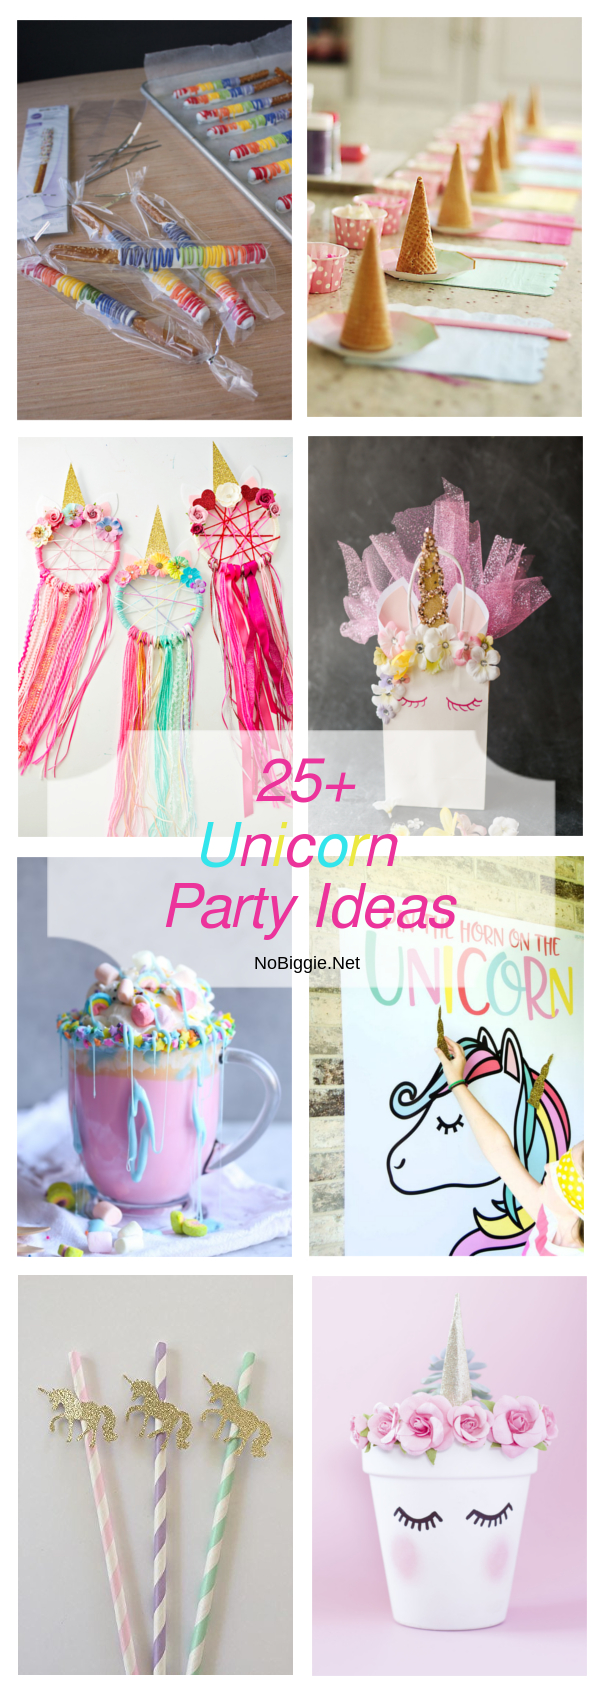 25+ Unicorn Party Ideas | NoBiggie.net